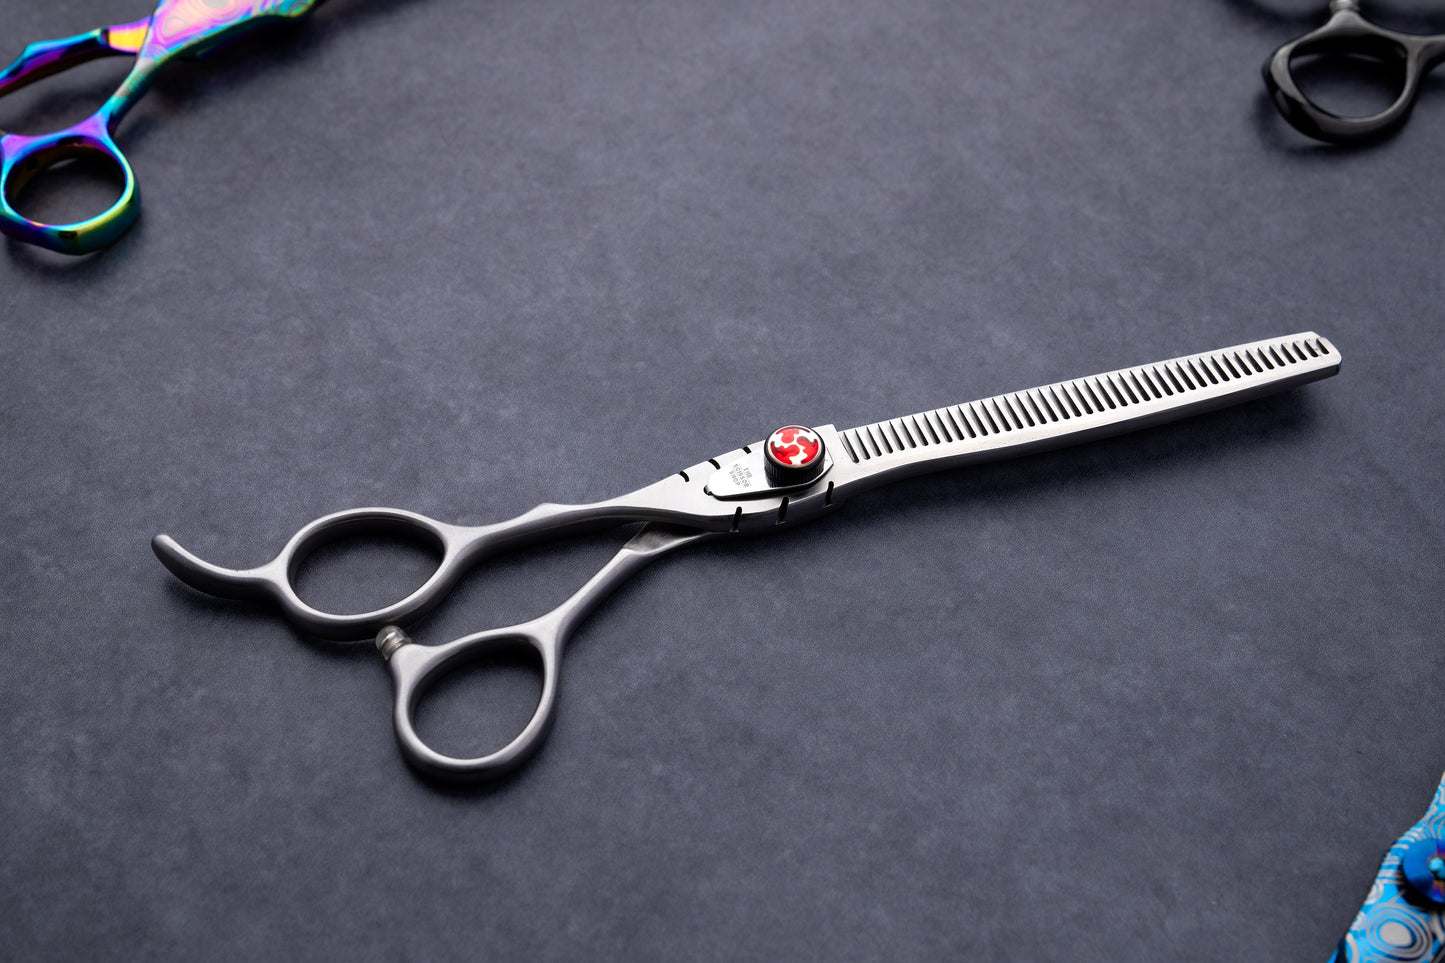 Kappatsu Series 7" Left Handed Japanese Steel Hairdressing Scissors